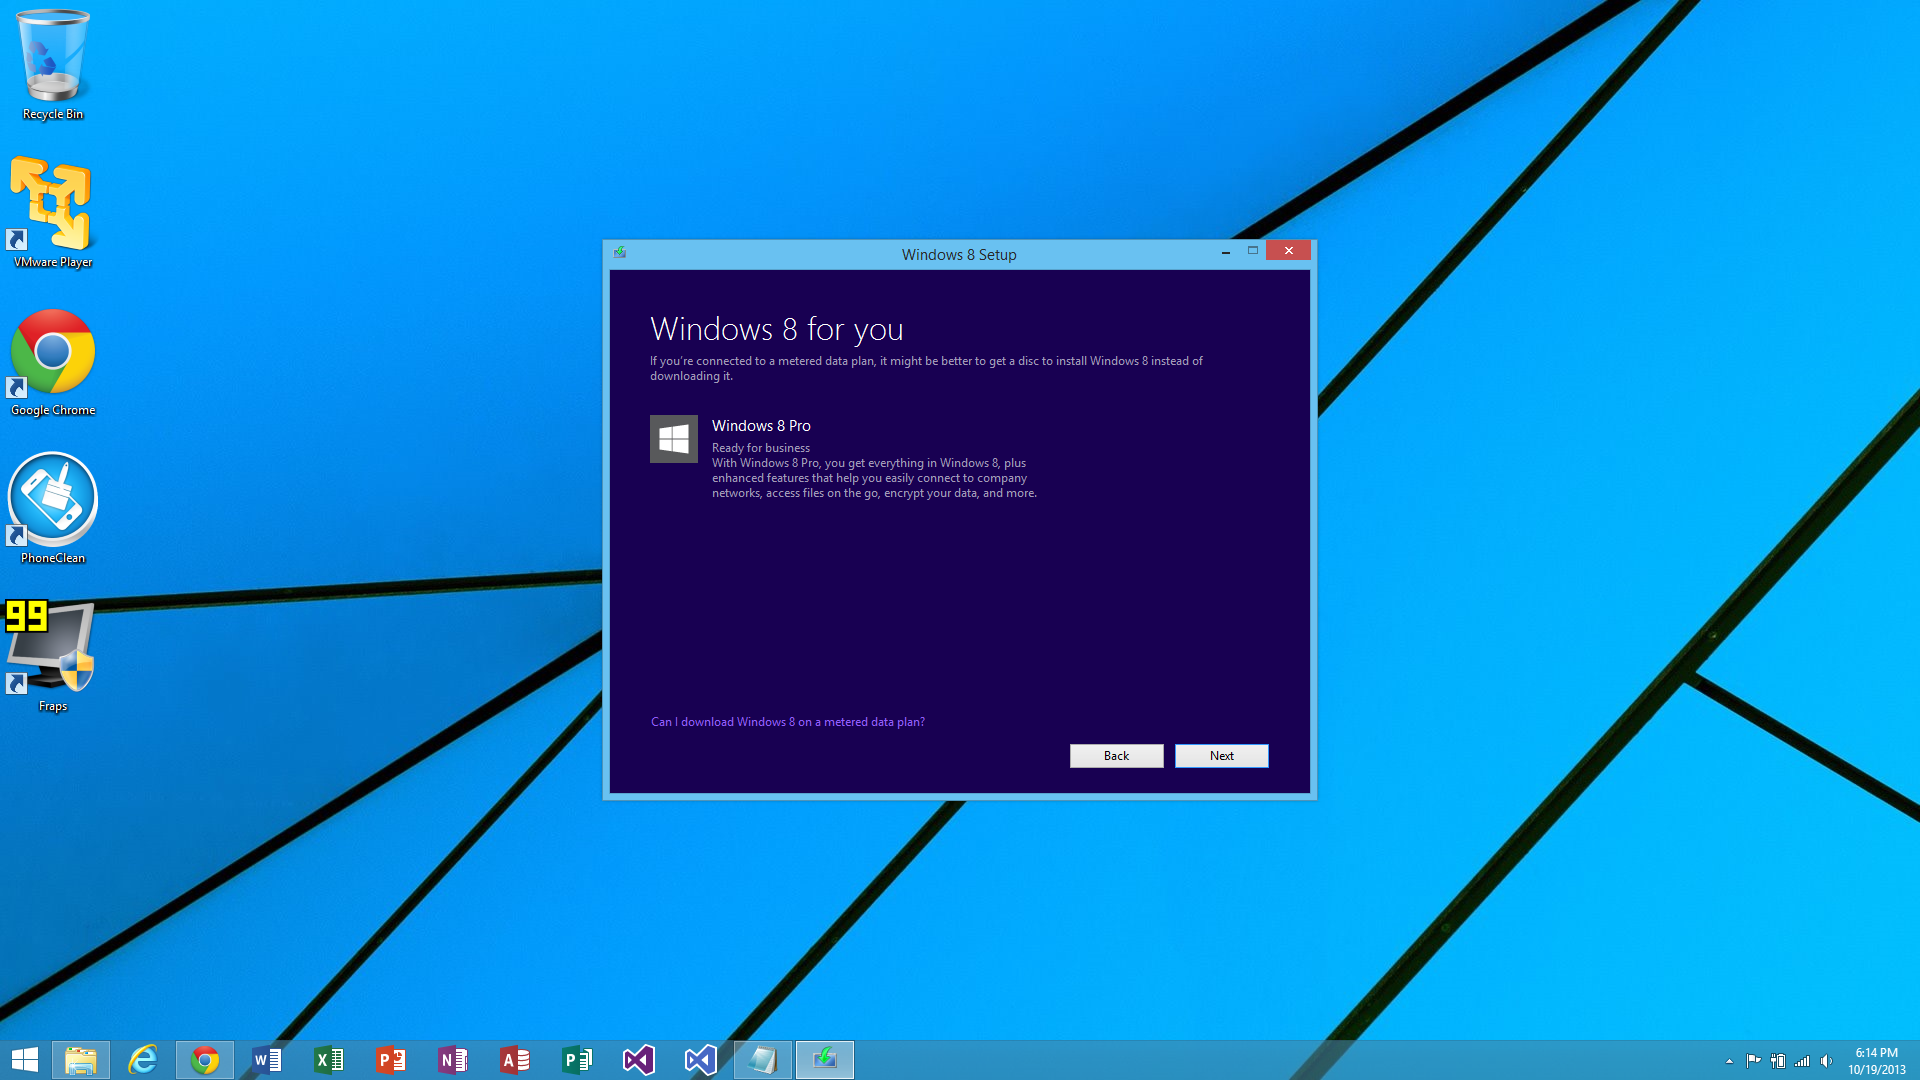 Windows 8 pro iso download free